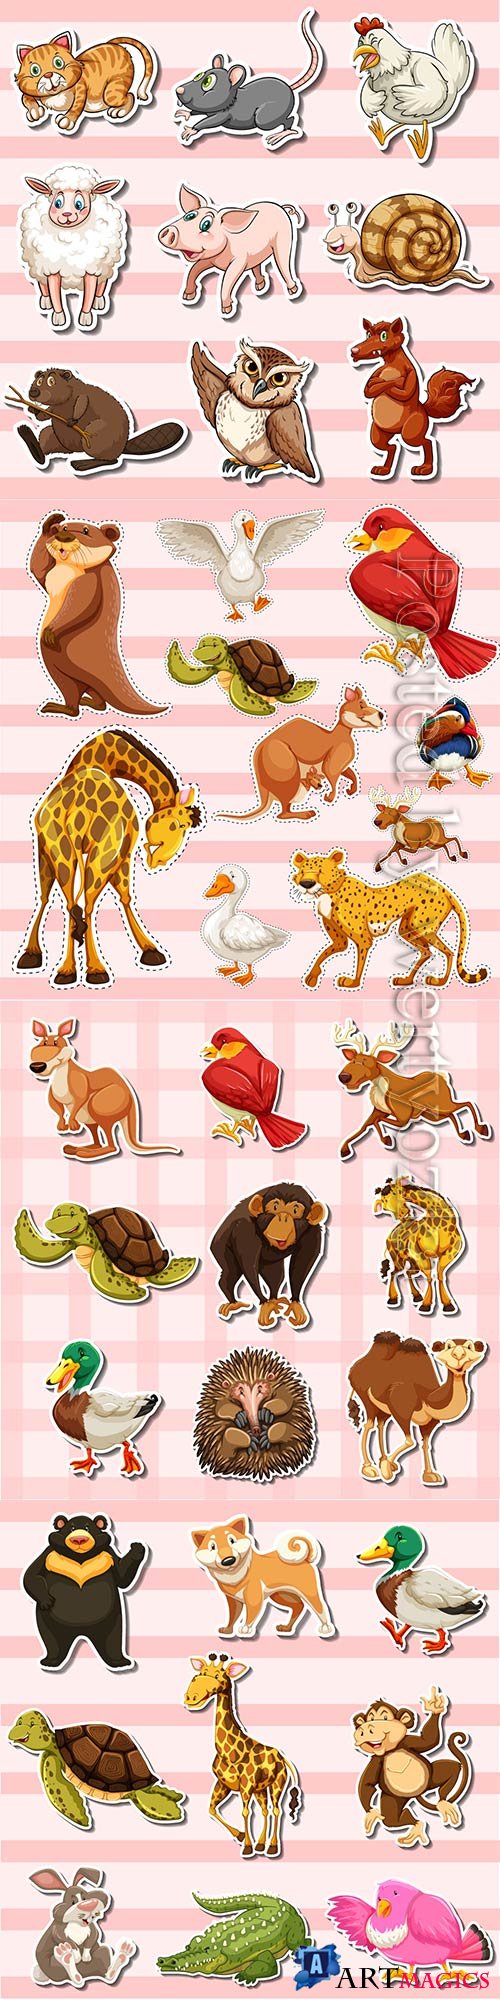 Sticker set with cute animals # 4